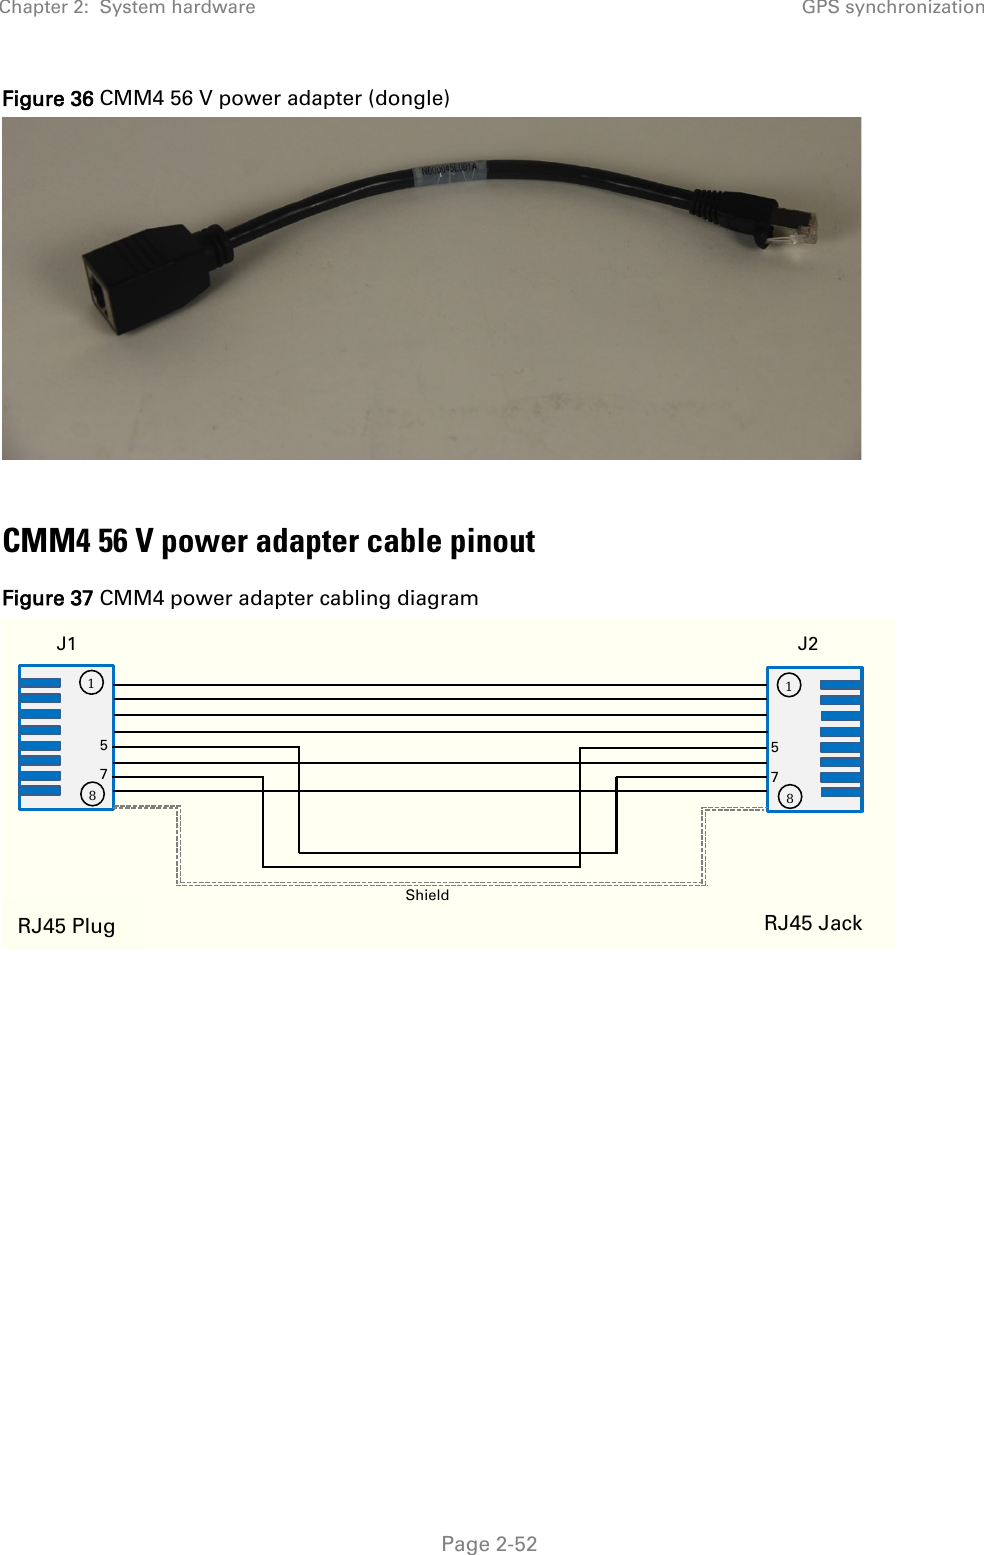 Chapter 2:  System hardware GPS synchronization   Page 2-52 Figure 36 CMM4 56 V power adapter (dongle)   CMM4 56 V power adapter cable pinout Figure 37 CMM4 power adapter cabling diagram   1 8 1 8 J1 J2 RJ45 Plug RJ45 Jack 5 7 5 7 Shield 